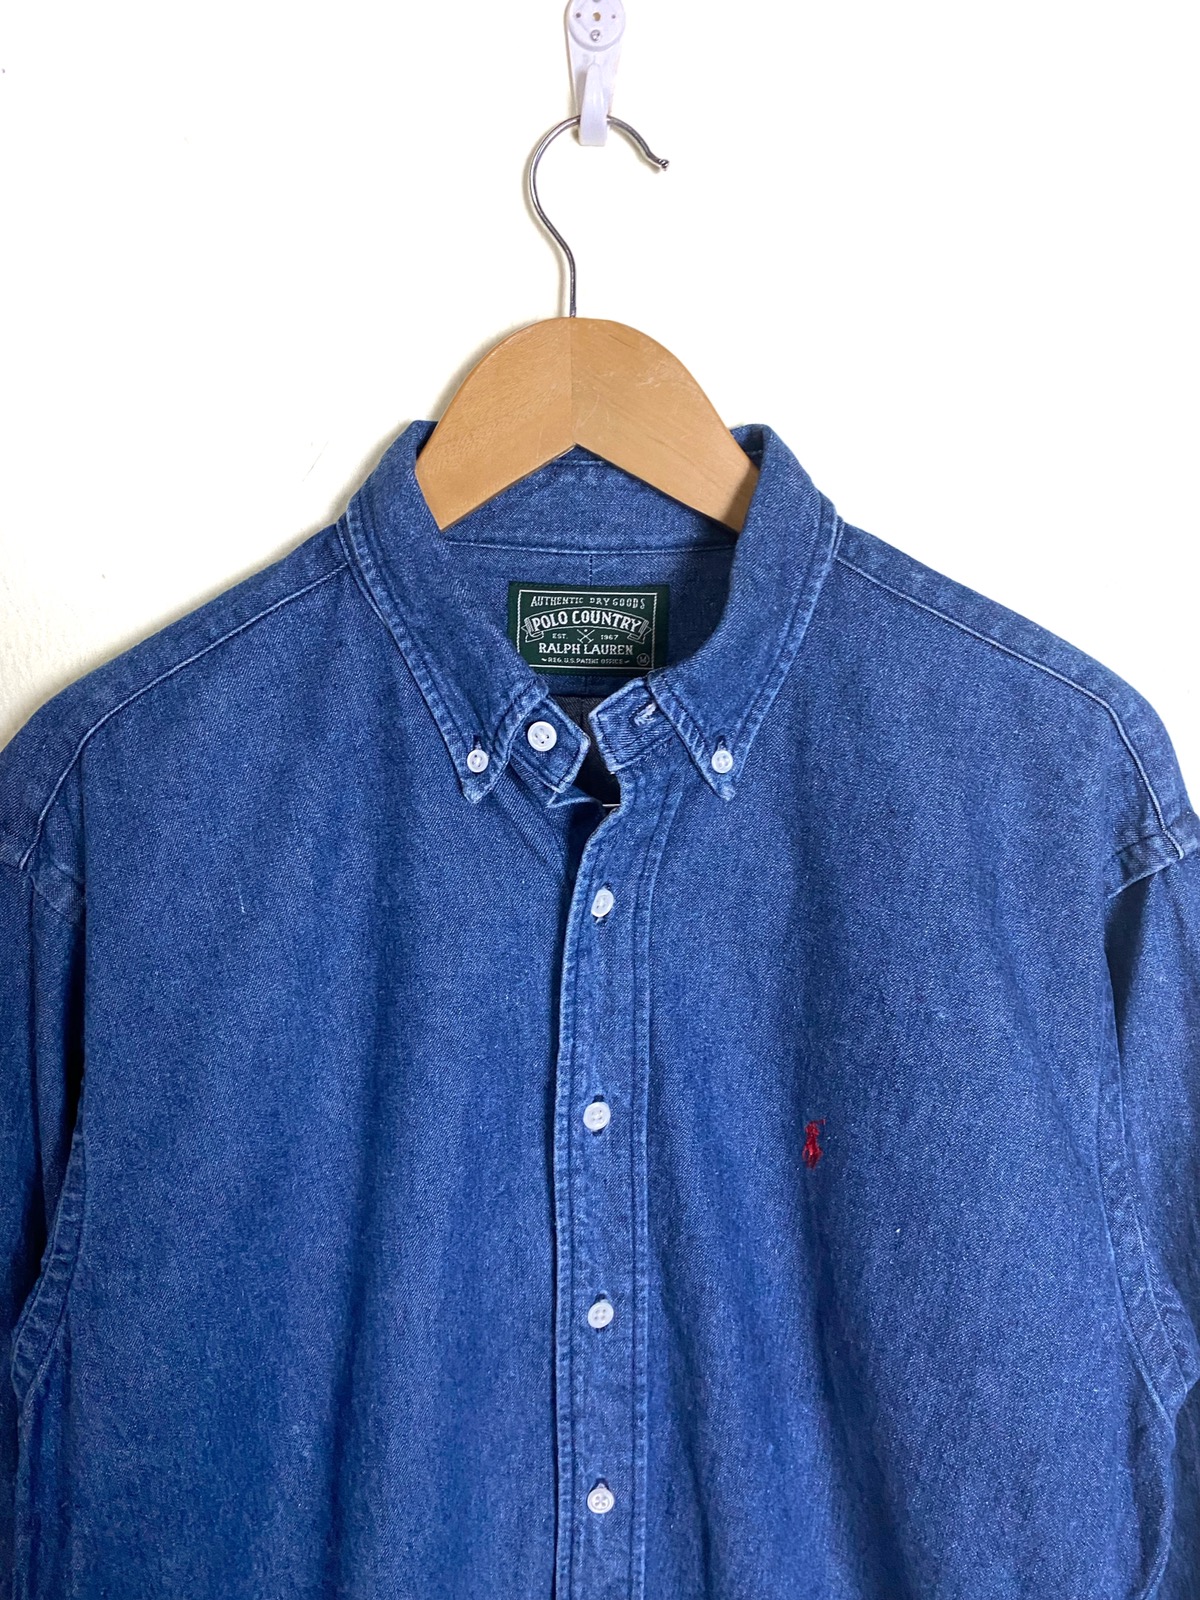 Polo Ralph Lauren - Vintage 90’s POLO Ralph Lauren Polo Country Denim Jean Shirt - 2